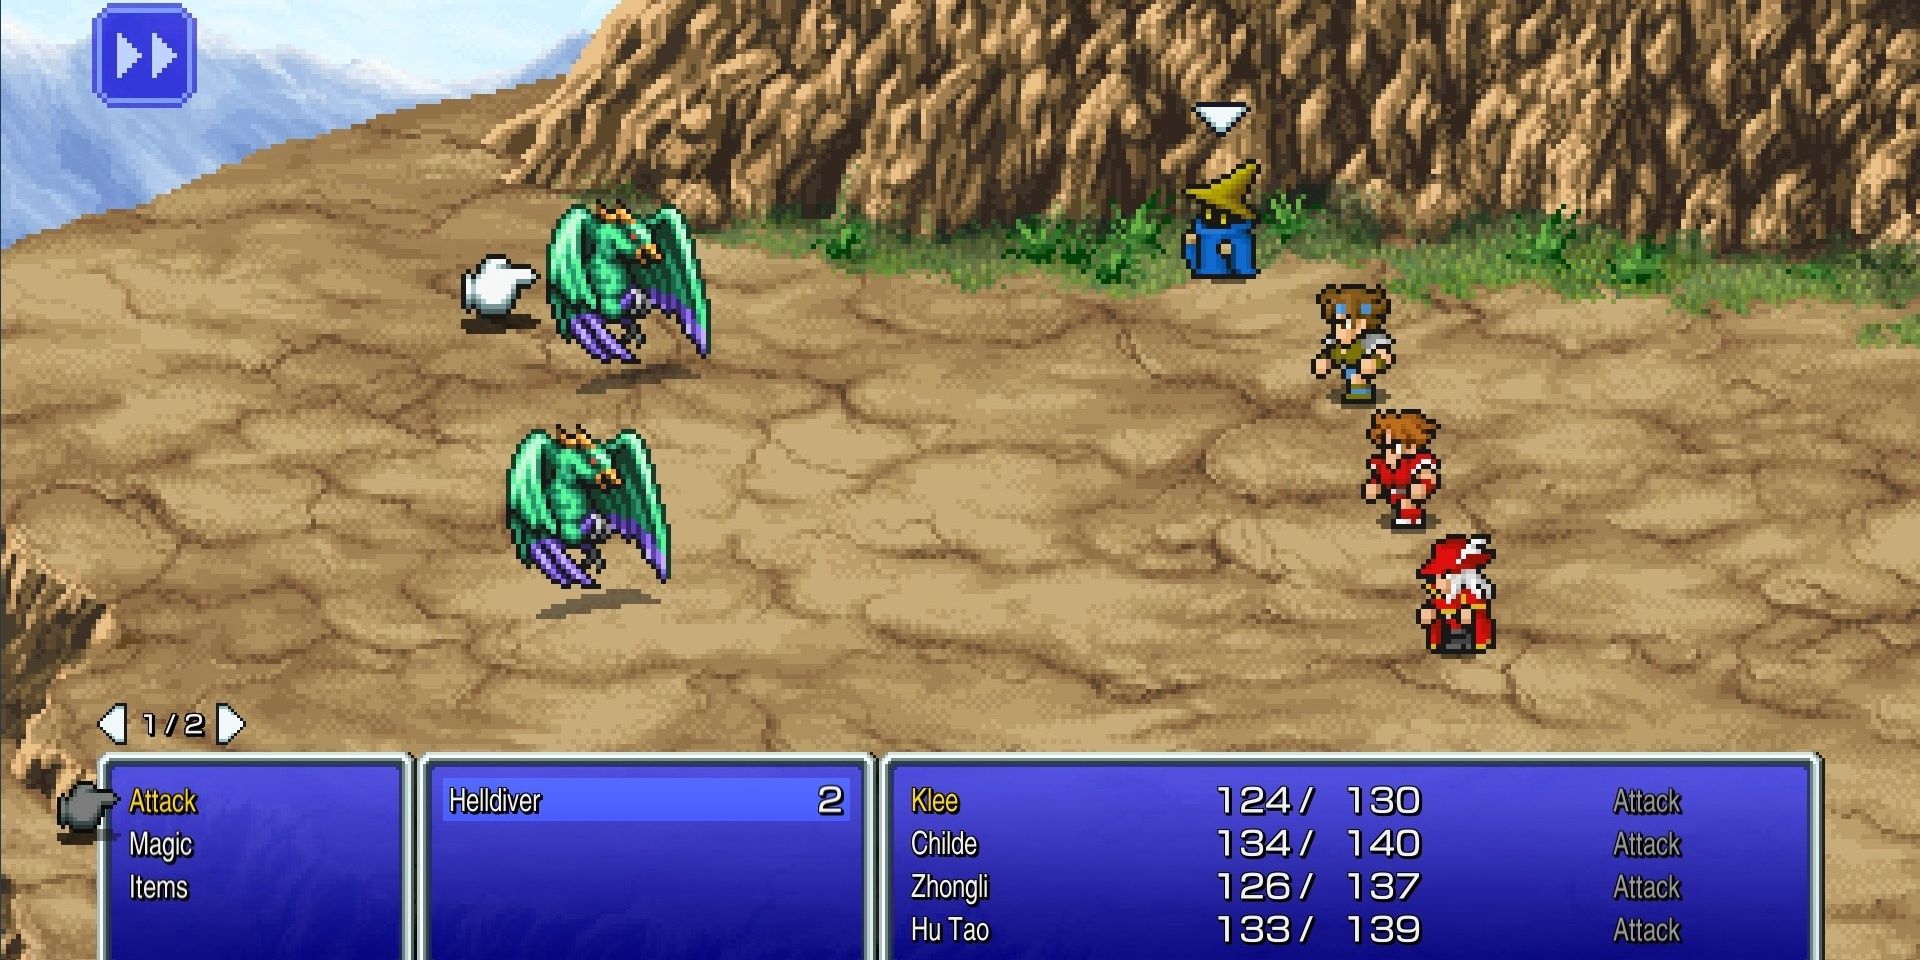 Auto-battling in Final Fantasy Pixel Remaster